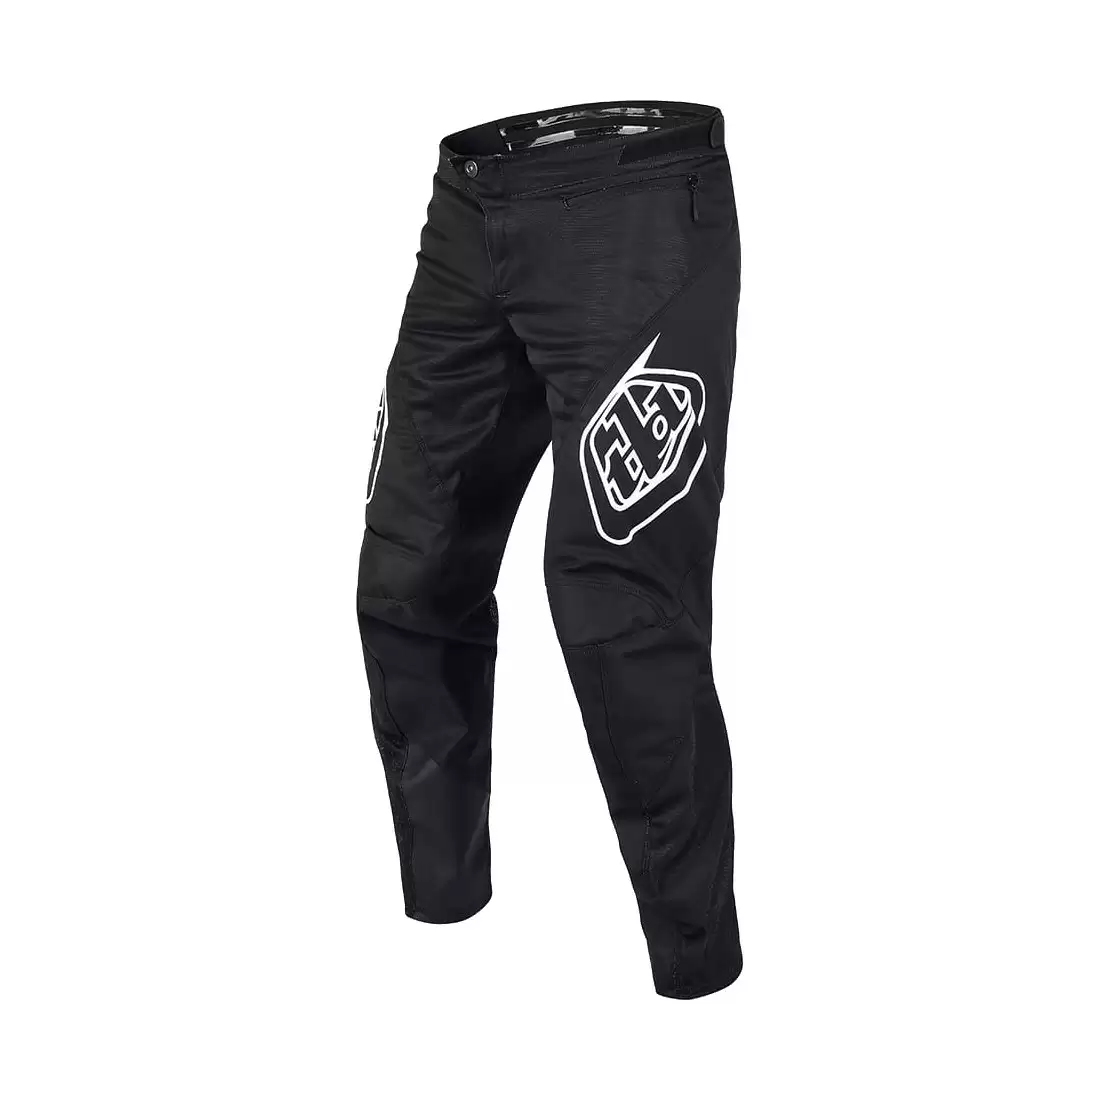 DH/Enduro Sprint MTB Long Pants Black Size L - image